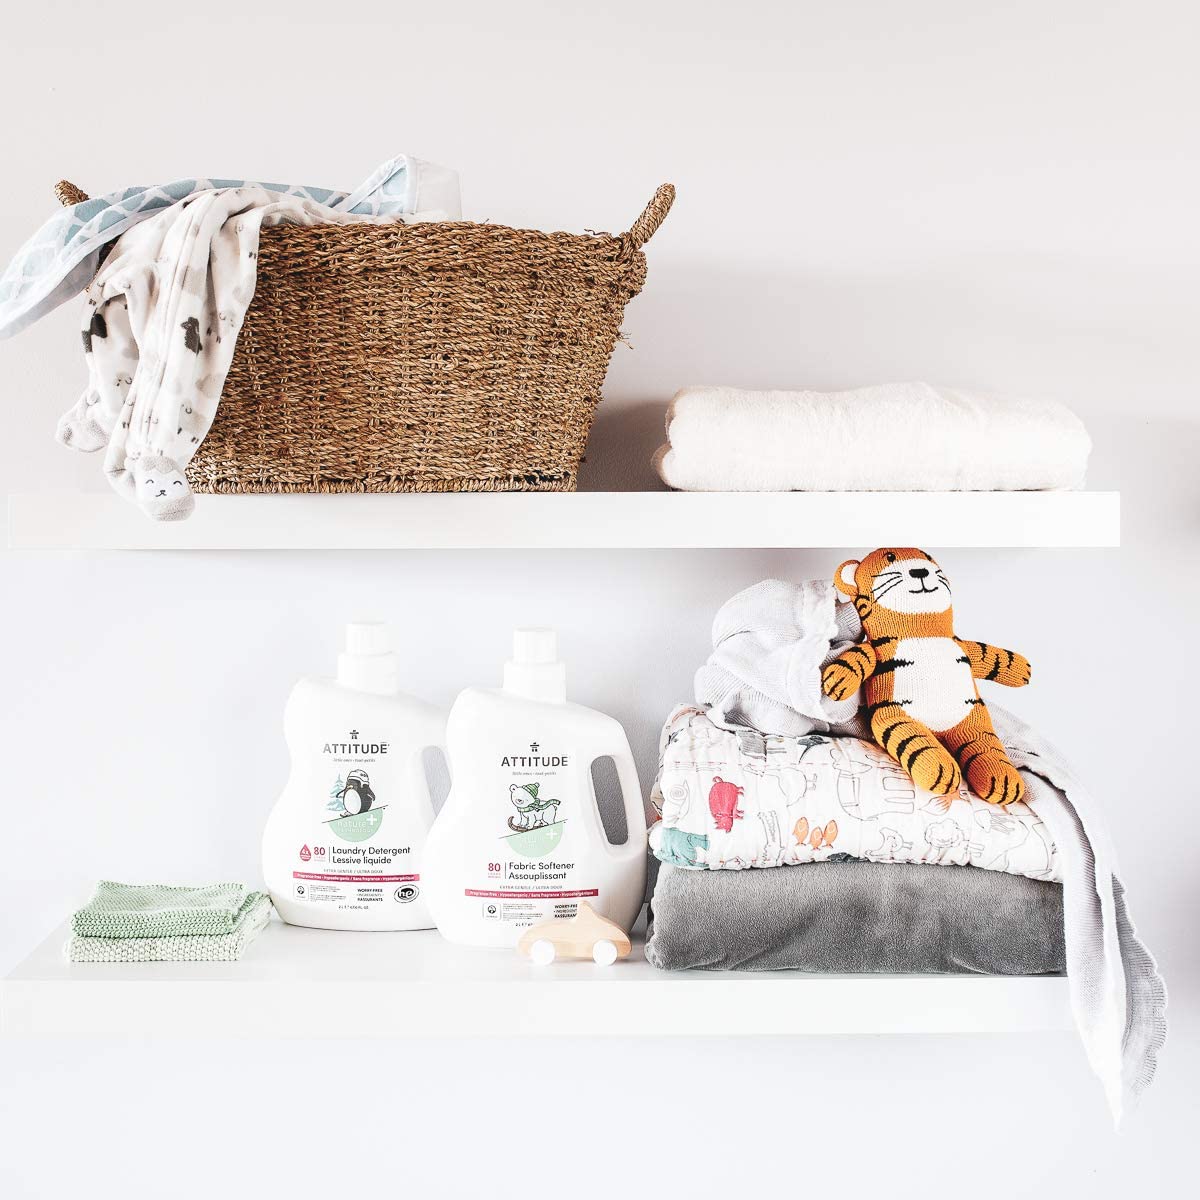 ATTITUDE Natural Baby Laundry Detergent for Sensitive Skin, Concentrated Formula, Extra Gentle Safe Plant Based Ingredients, Fragrance Free, 67.6 Fl Oz, 80 Loads (Model: 12083)